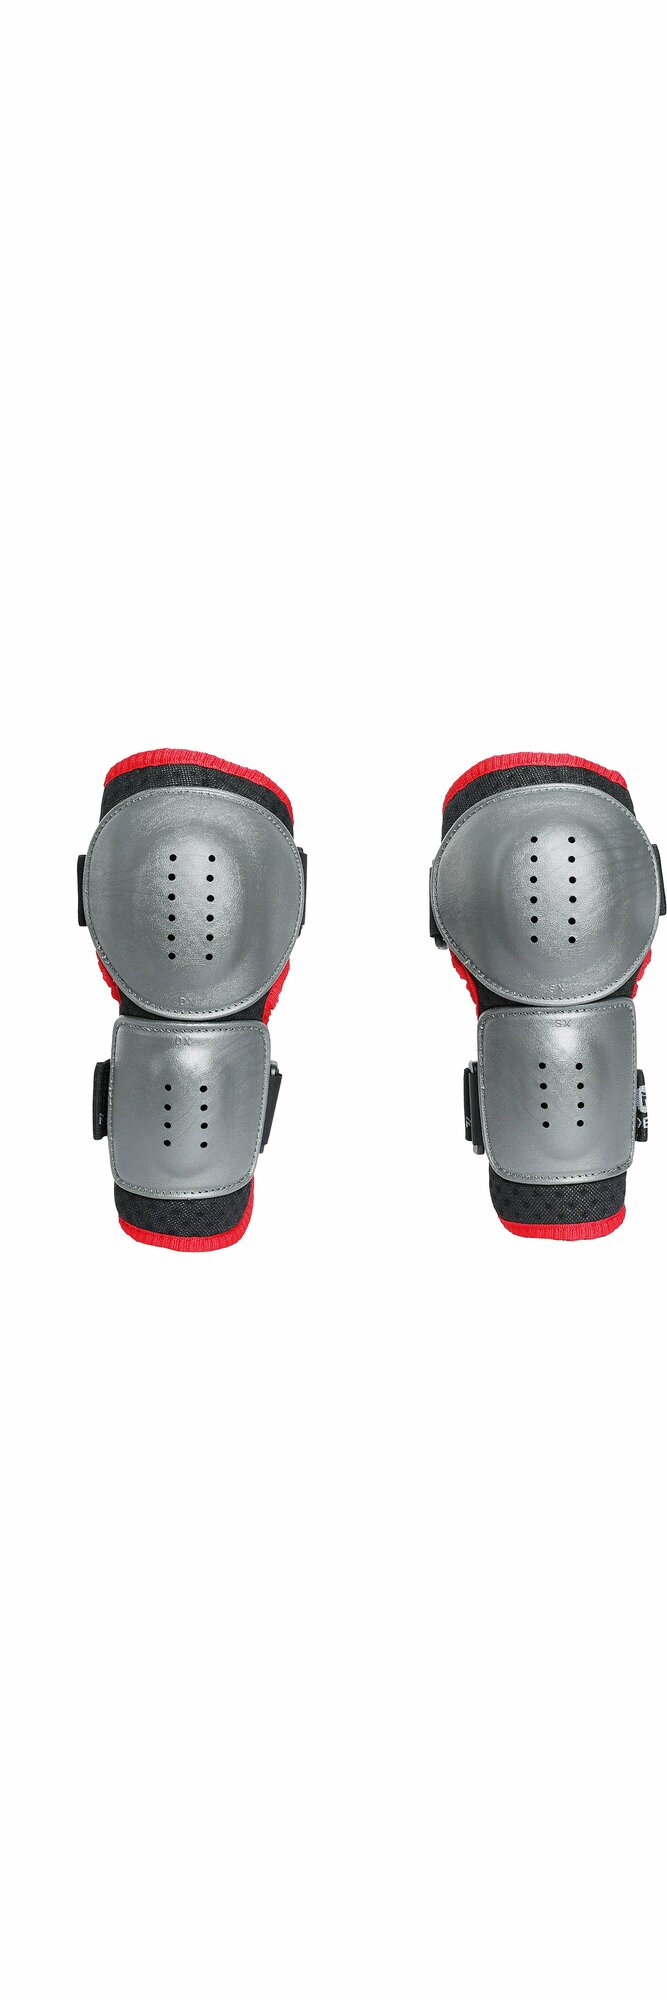 Защита локтей NIDECKER Multisport Elbow Guards Black/Red